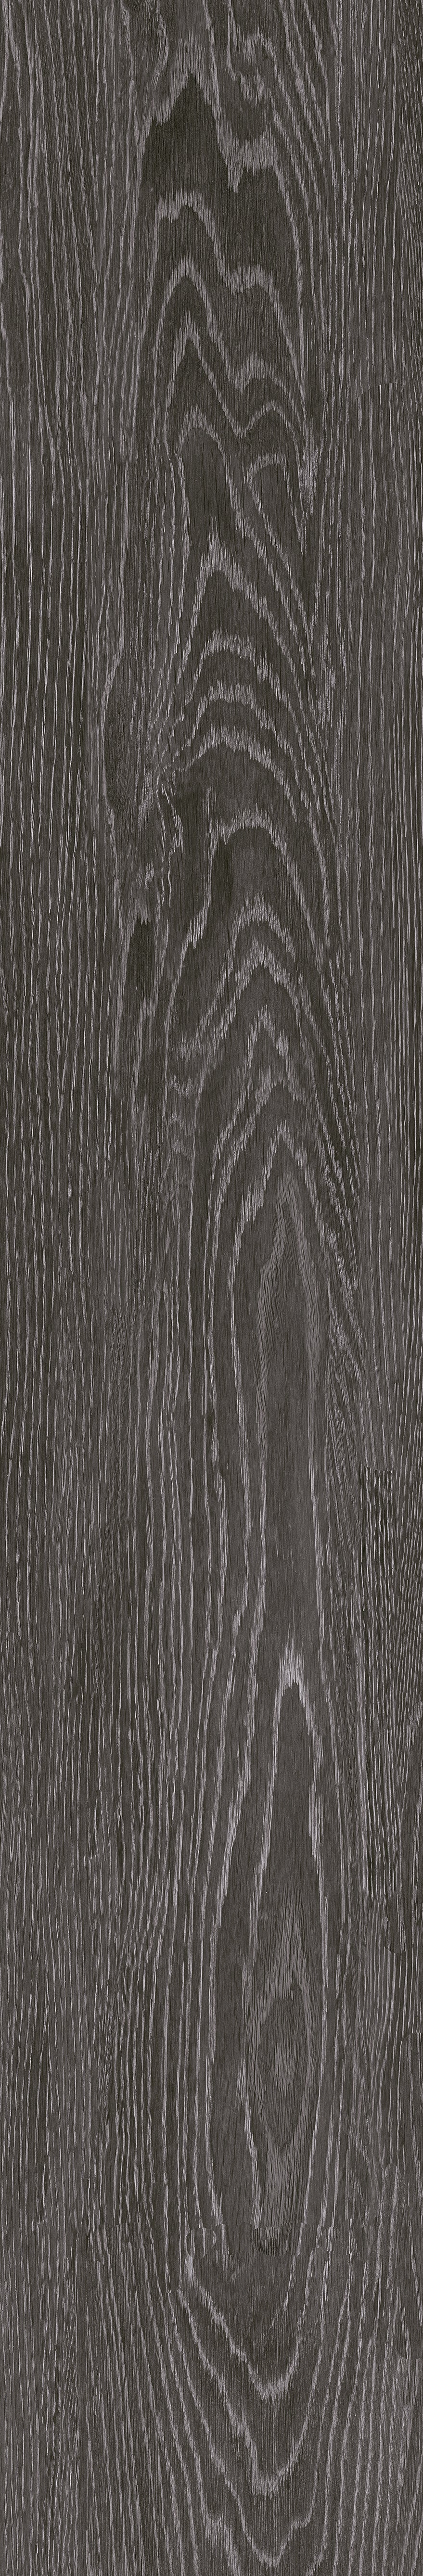 Giania 木紋磚 Bm122805m